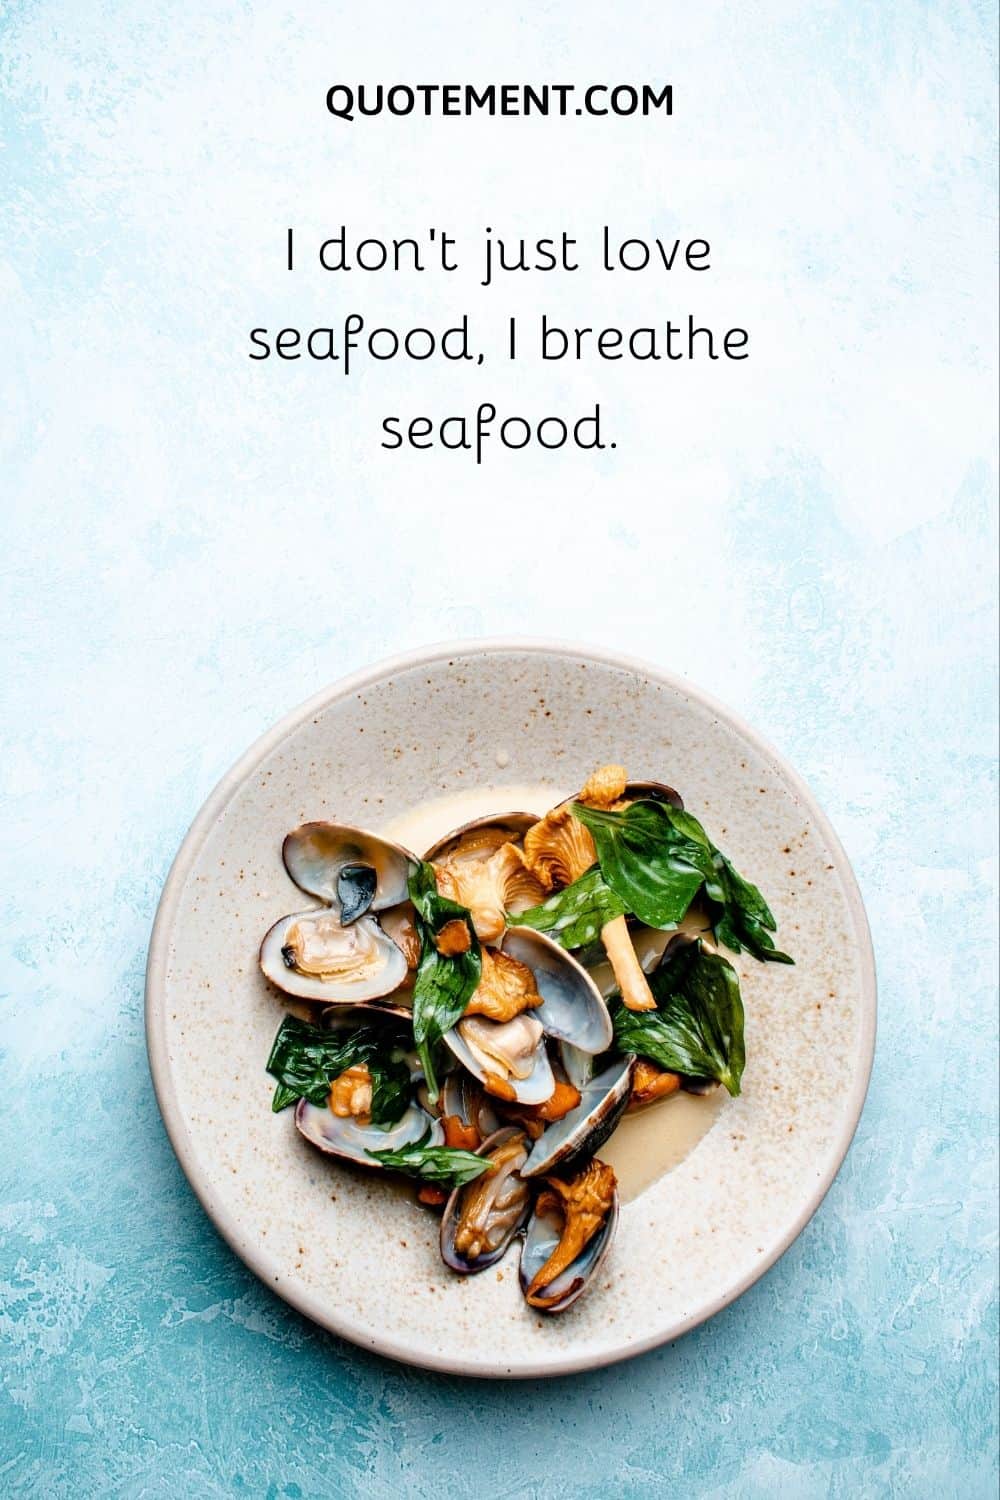 I don’t just love seafood, I breathe seafood.